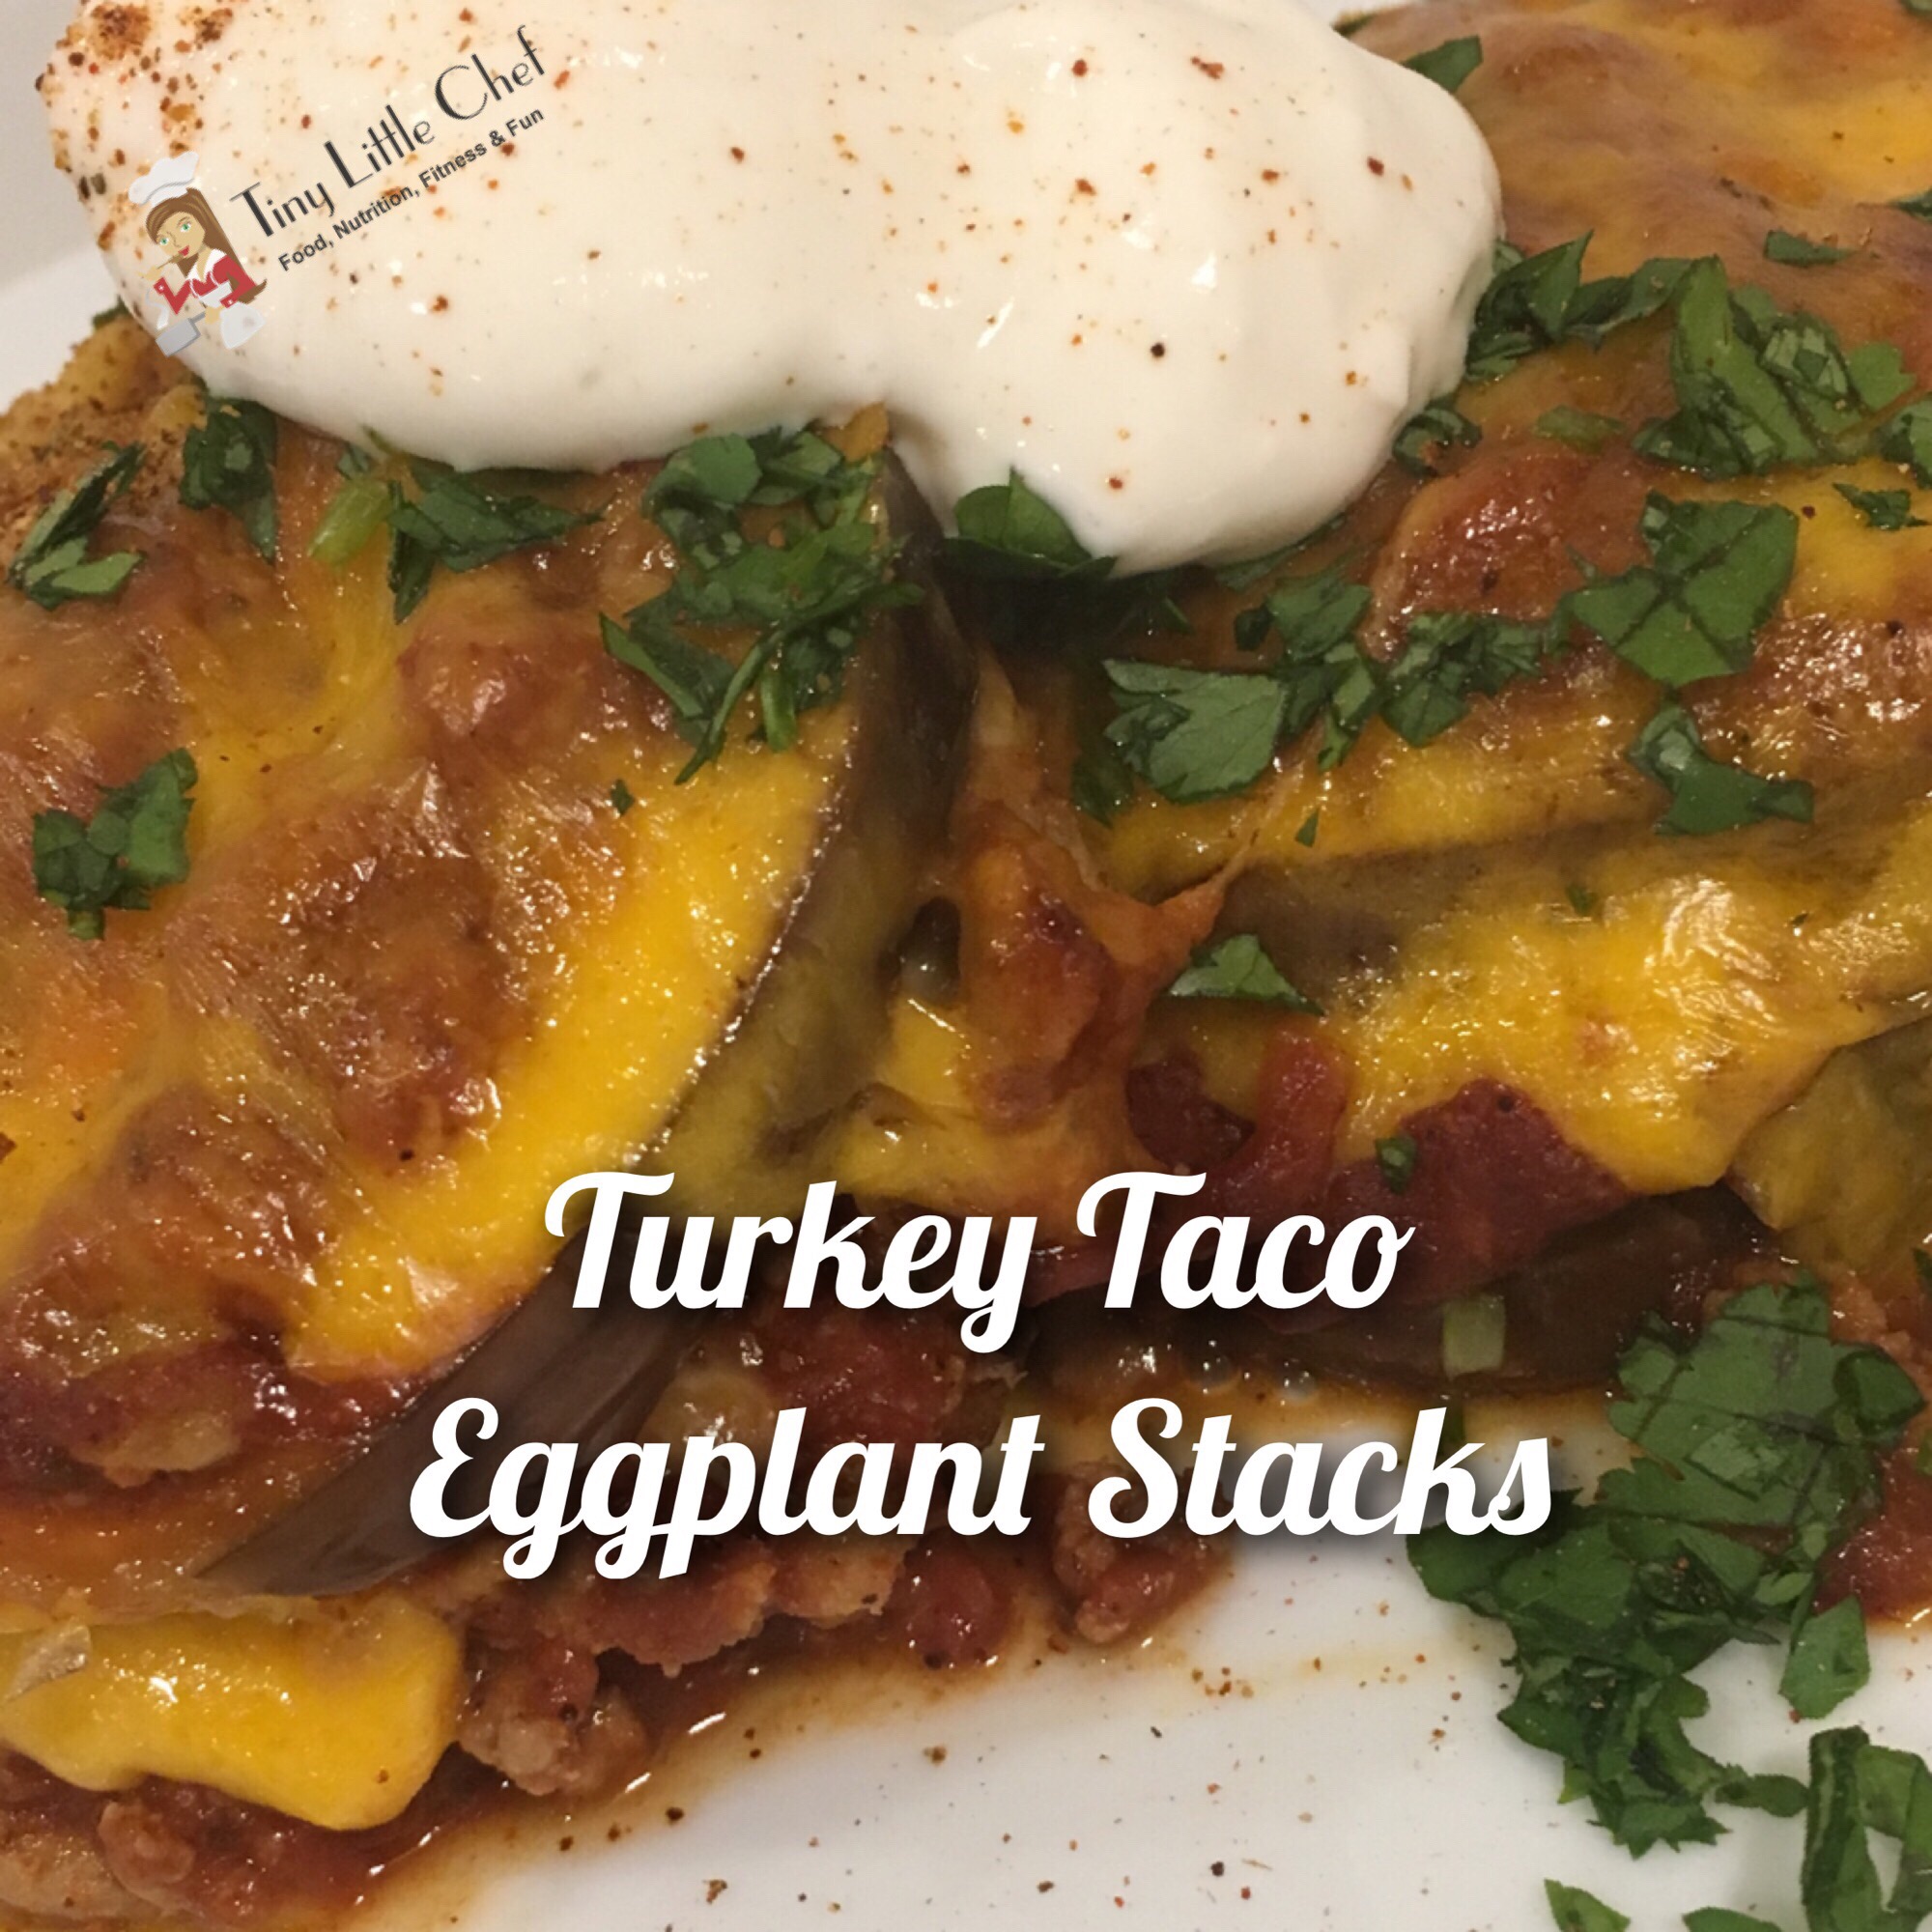 Tiny Little Chef Turkey Taco Eggplant Stacks